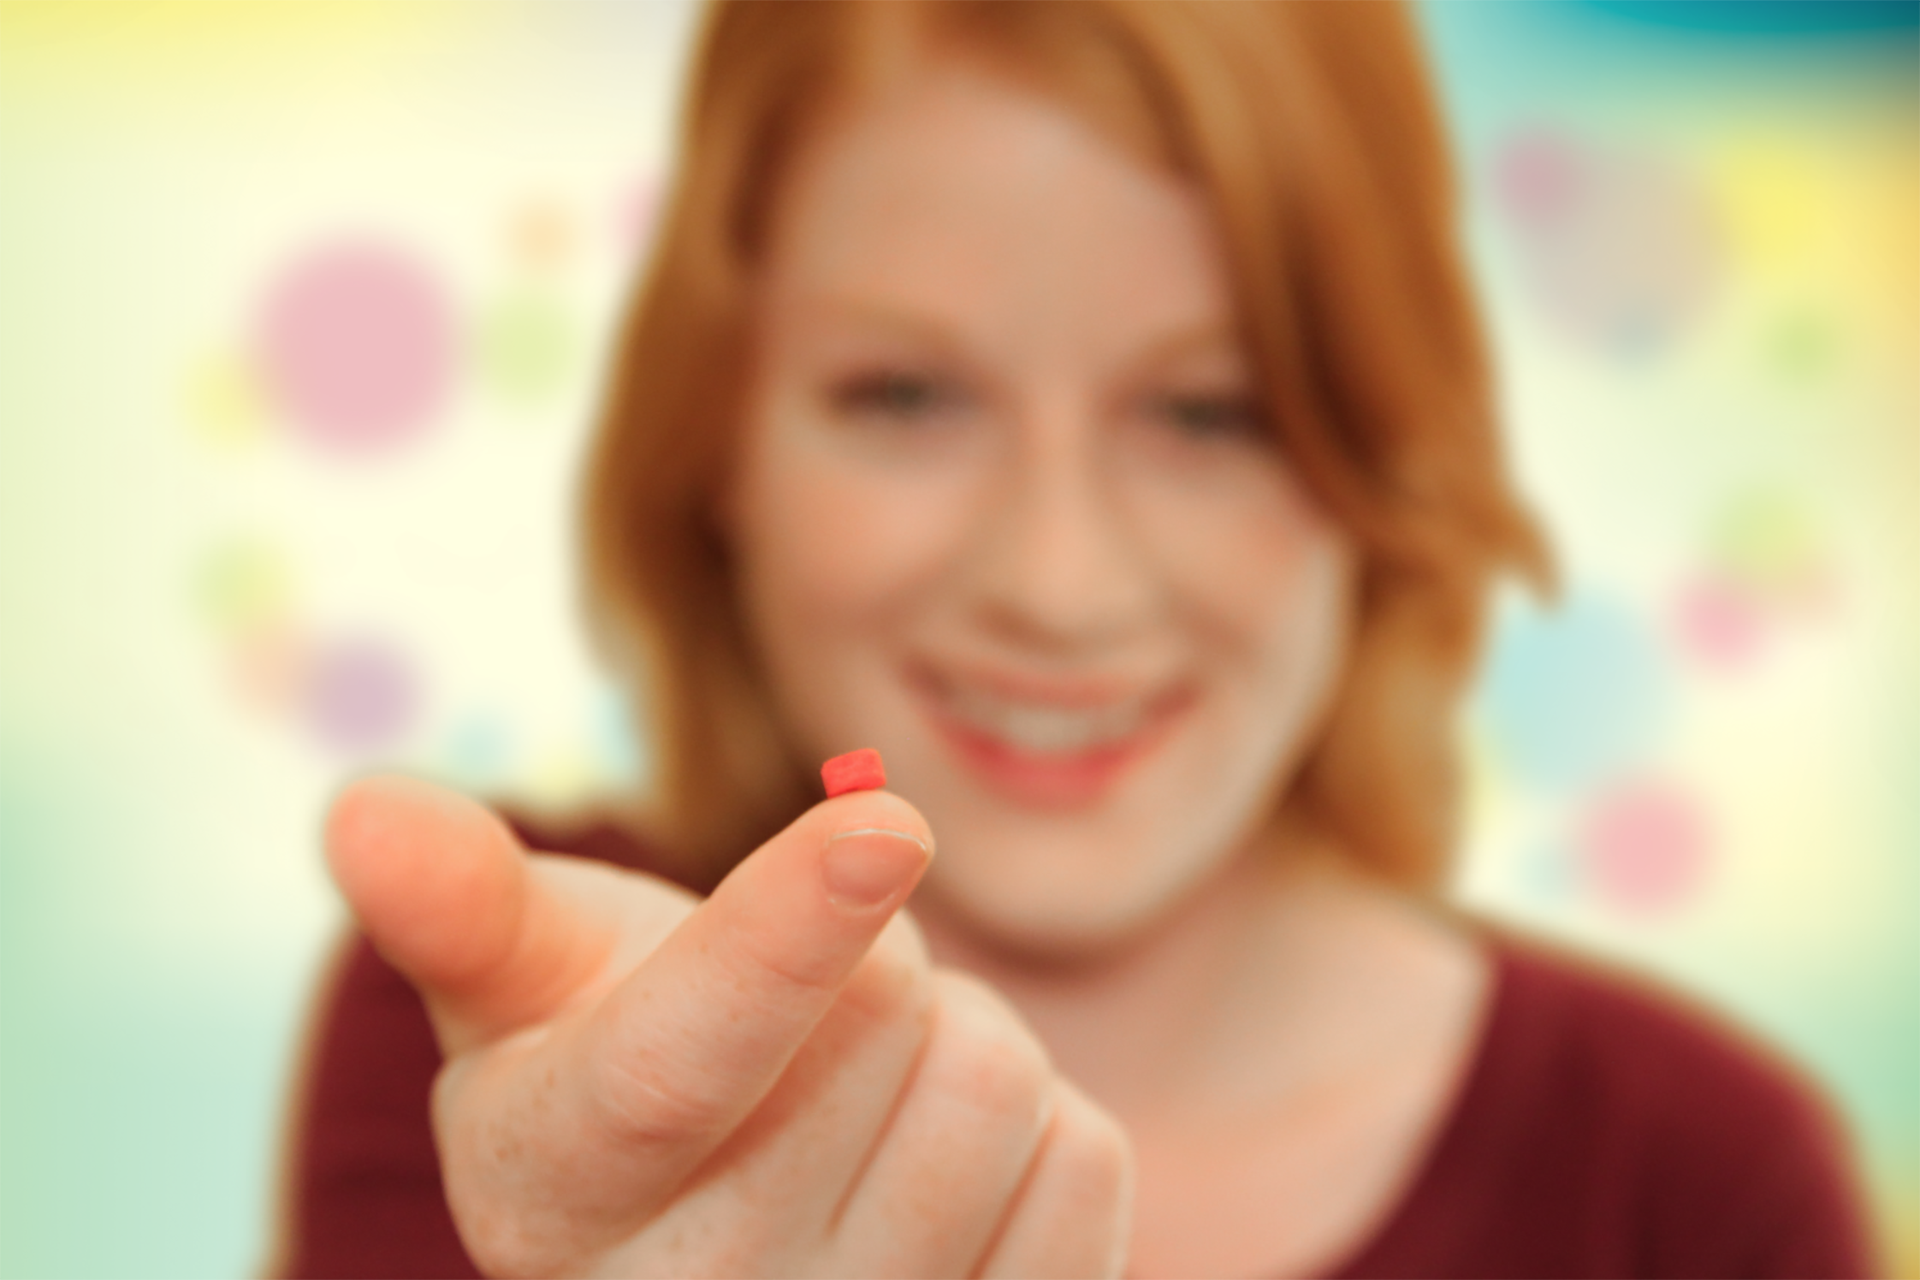 woman holding pill